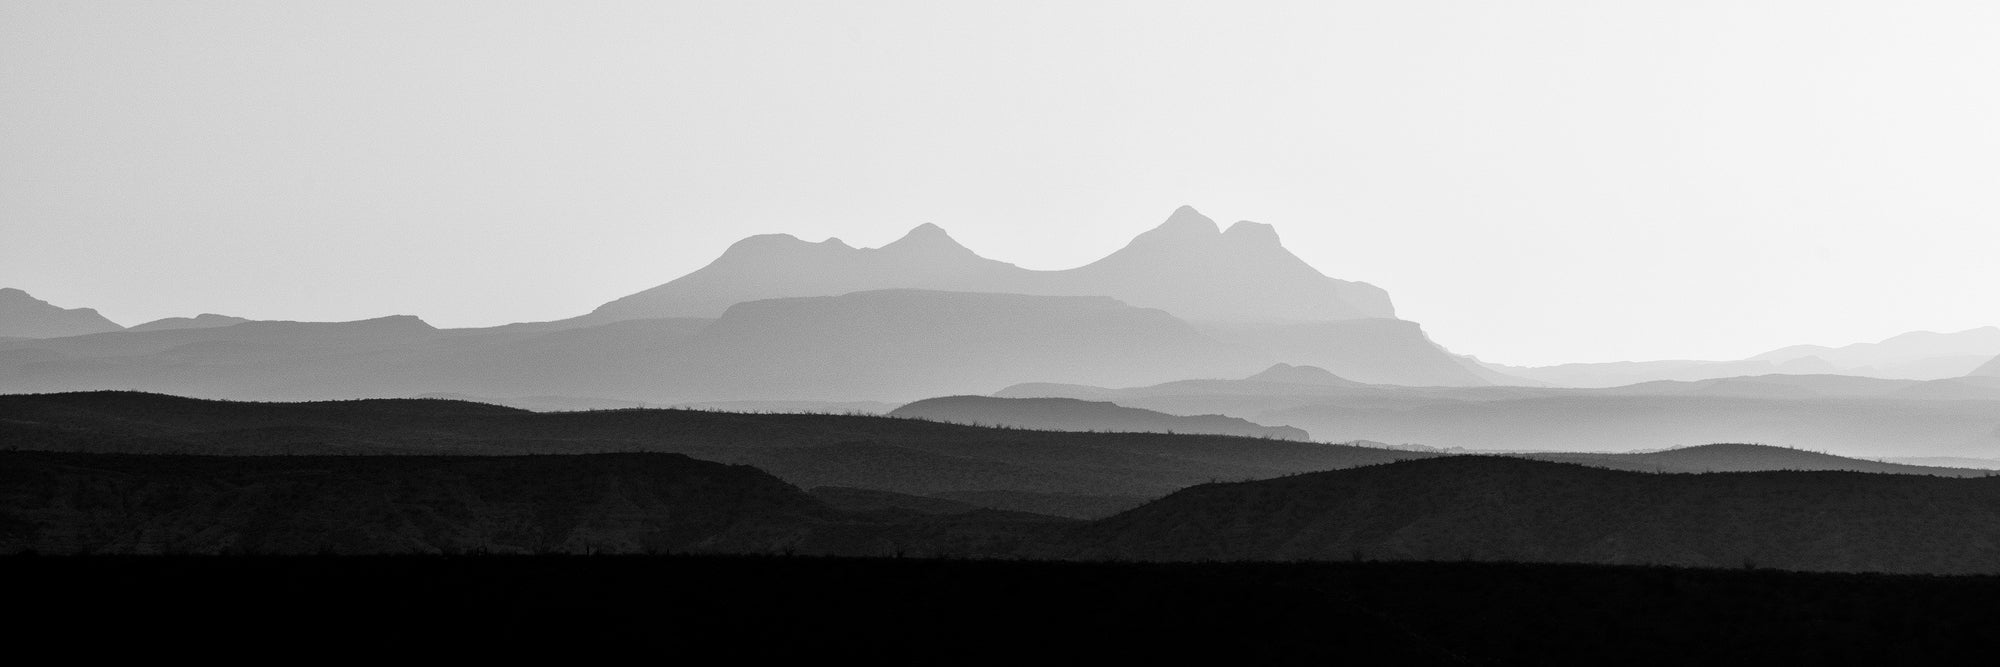 Hazy Mountain Sunrise Panorama: Black and White Landscape Photograph by Keith Dotson.